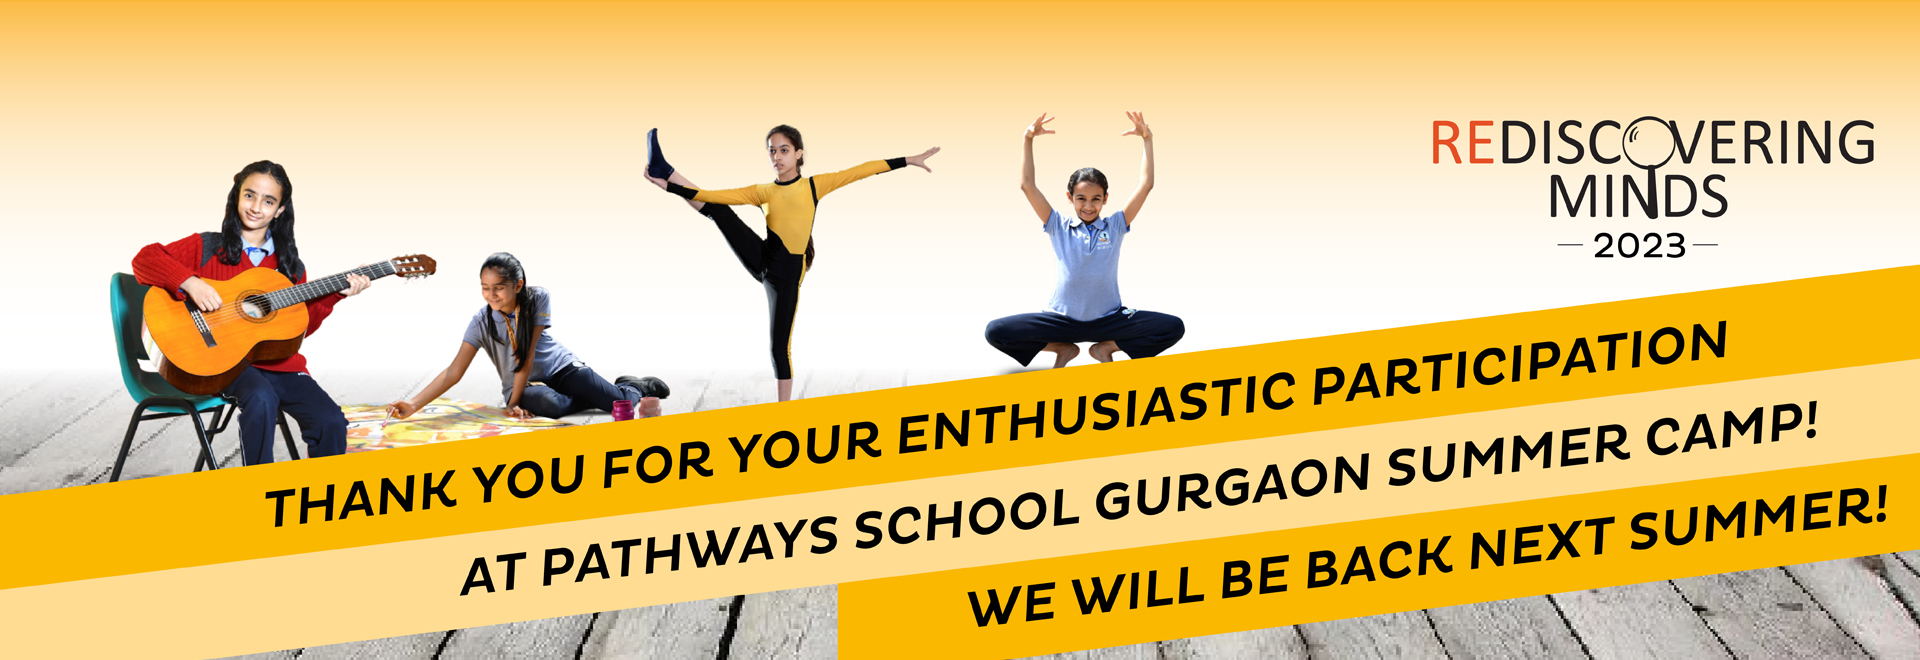 Pathways School Gurgaon - Summer Camp